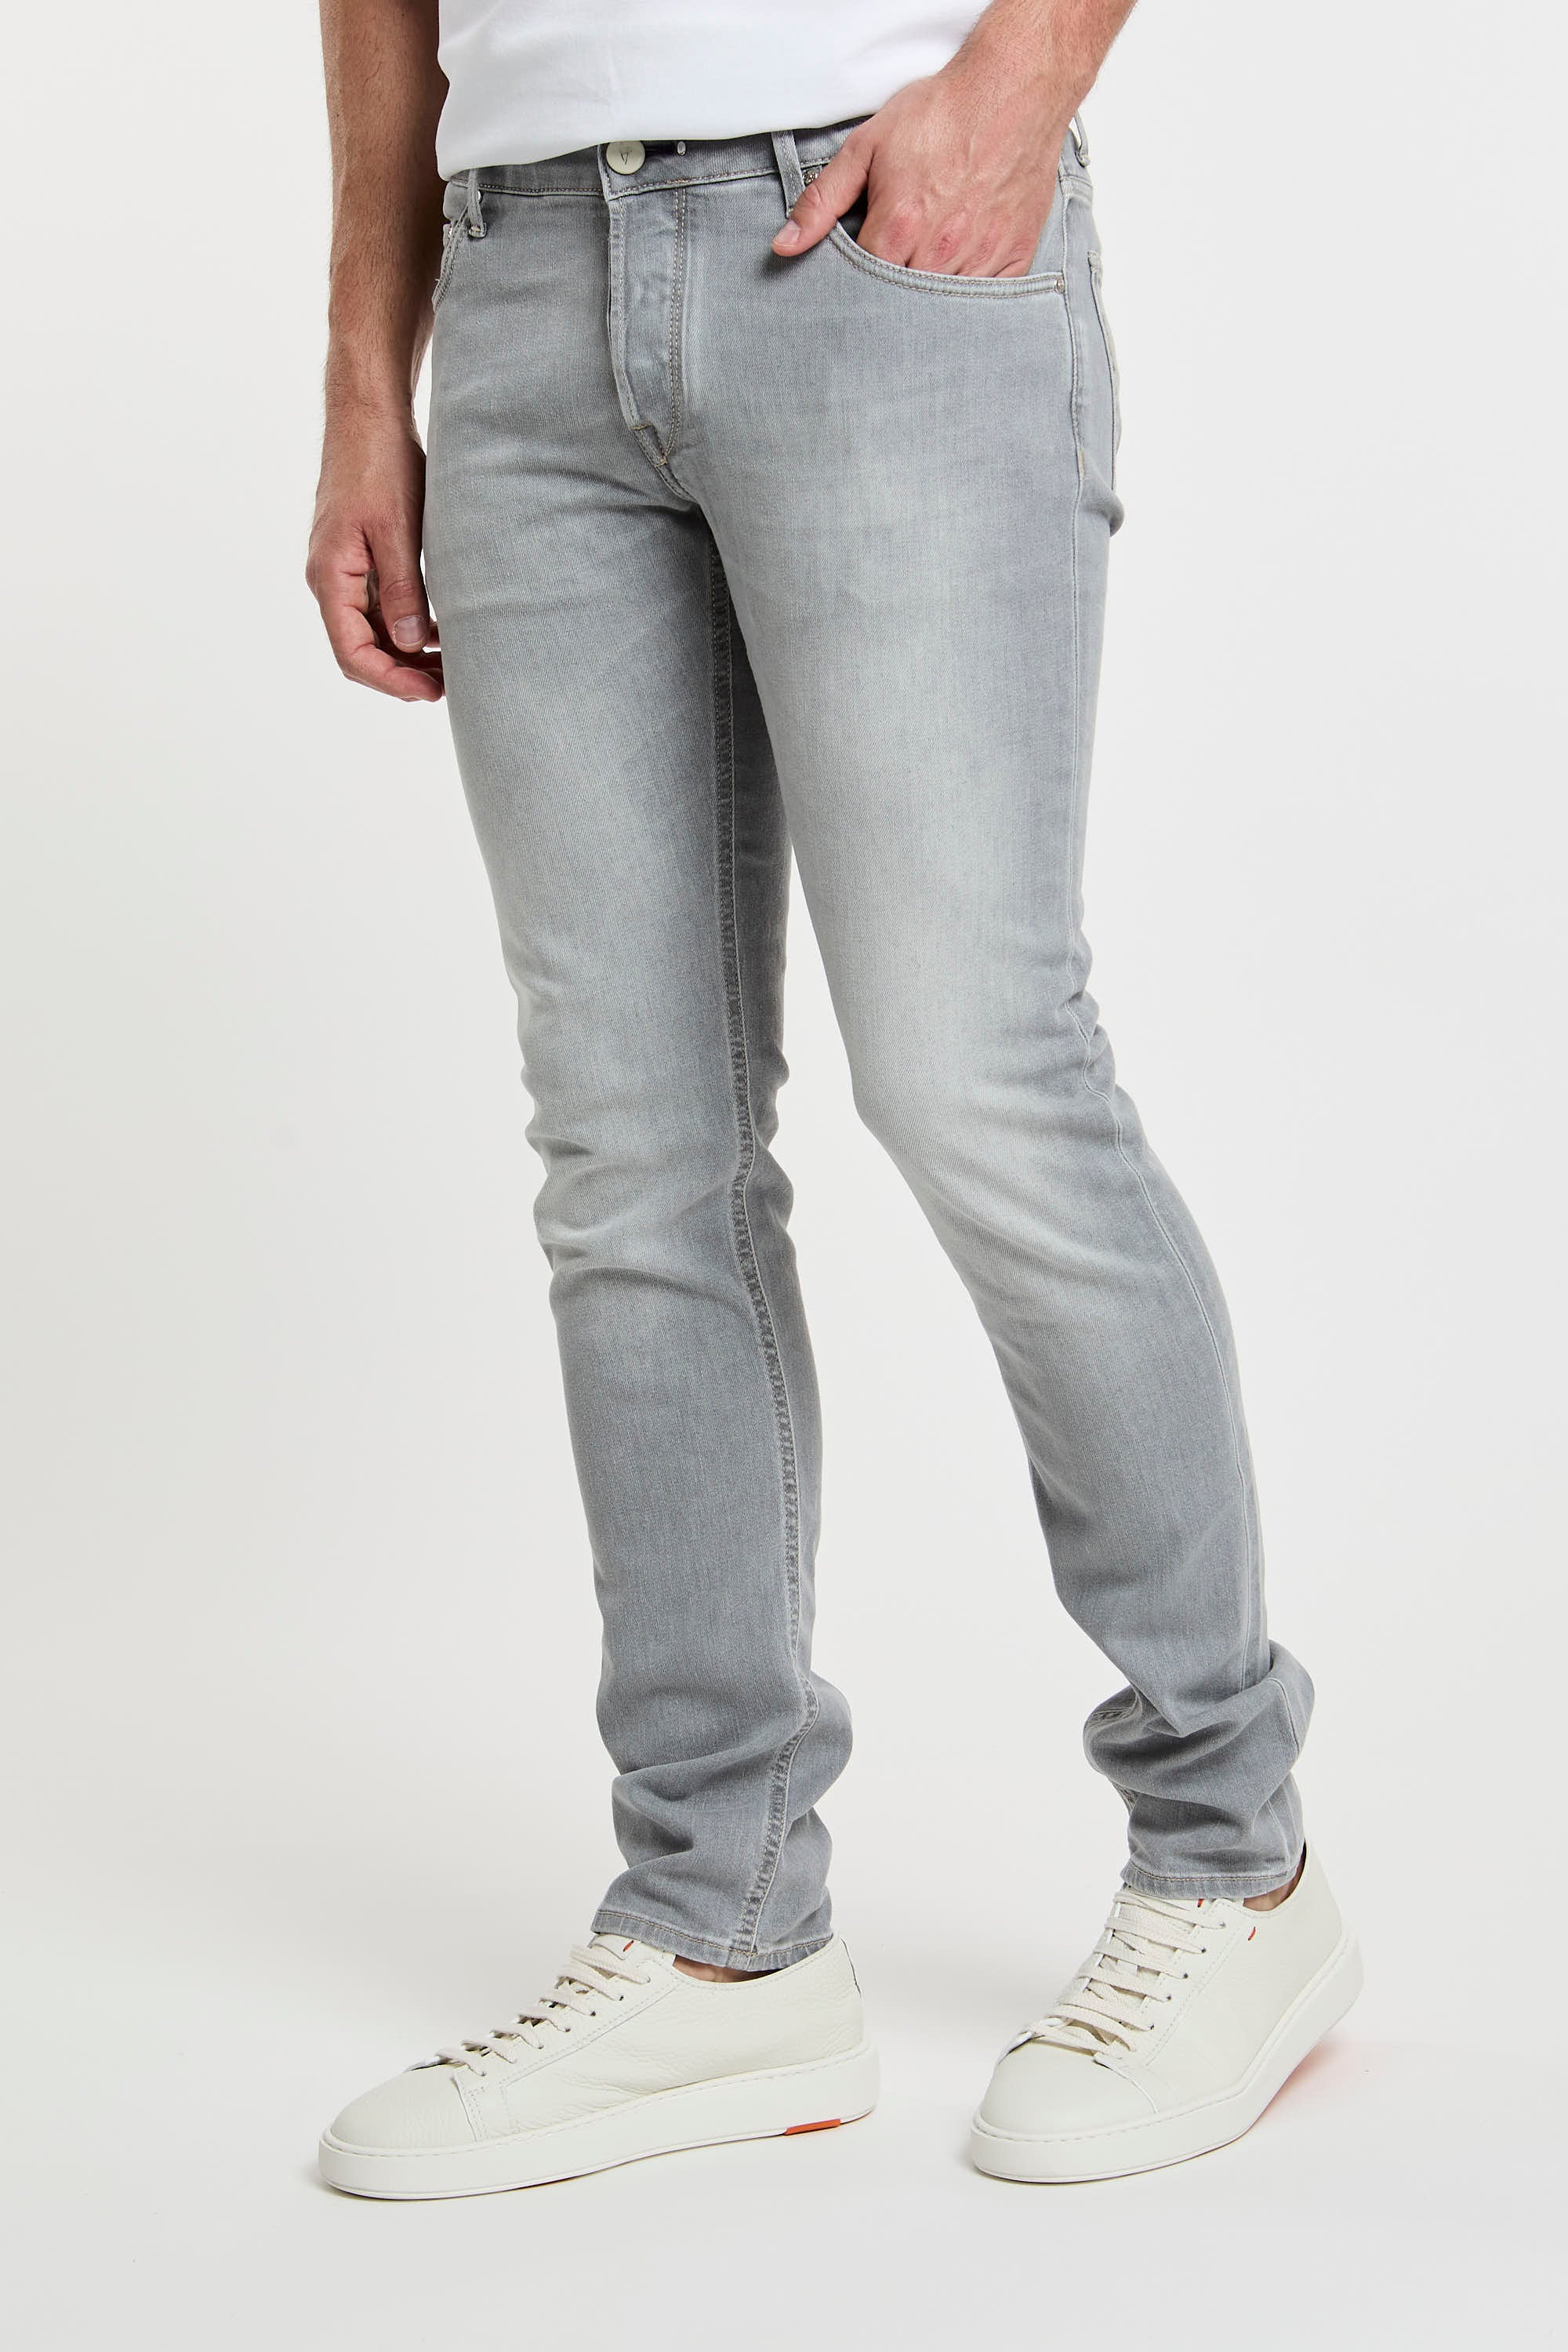 Handpicked Jeans Orvieto Cotton Grey-1